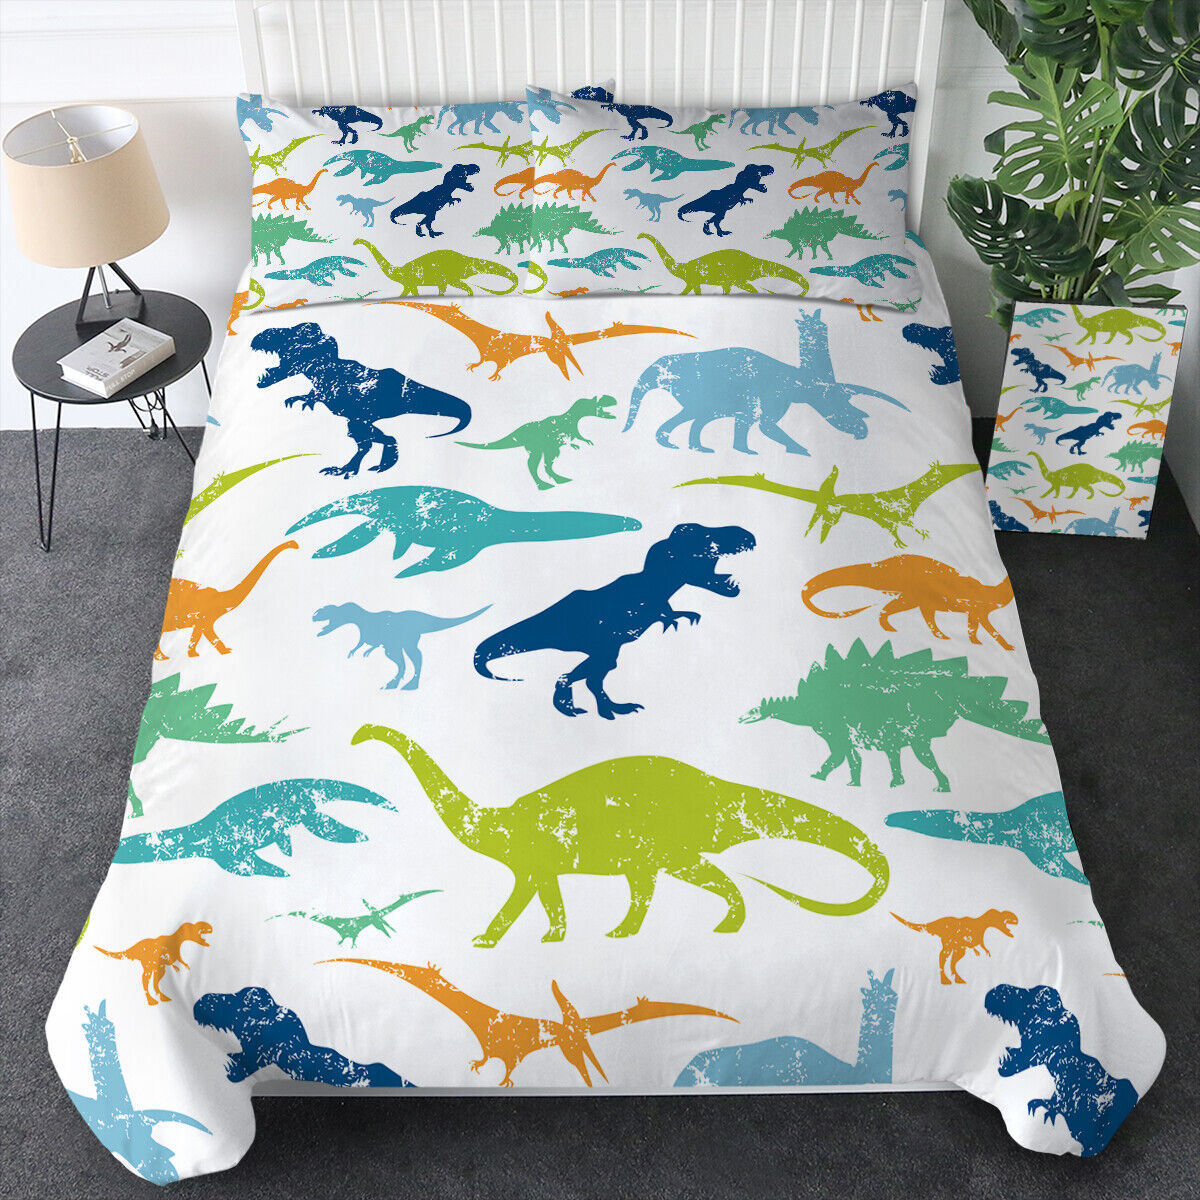 Dinosaur Bedding Set for Kids - 3Pcs Twin